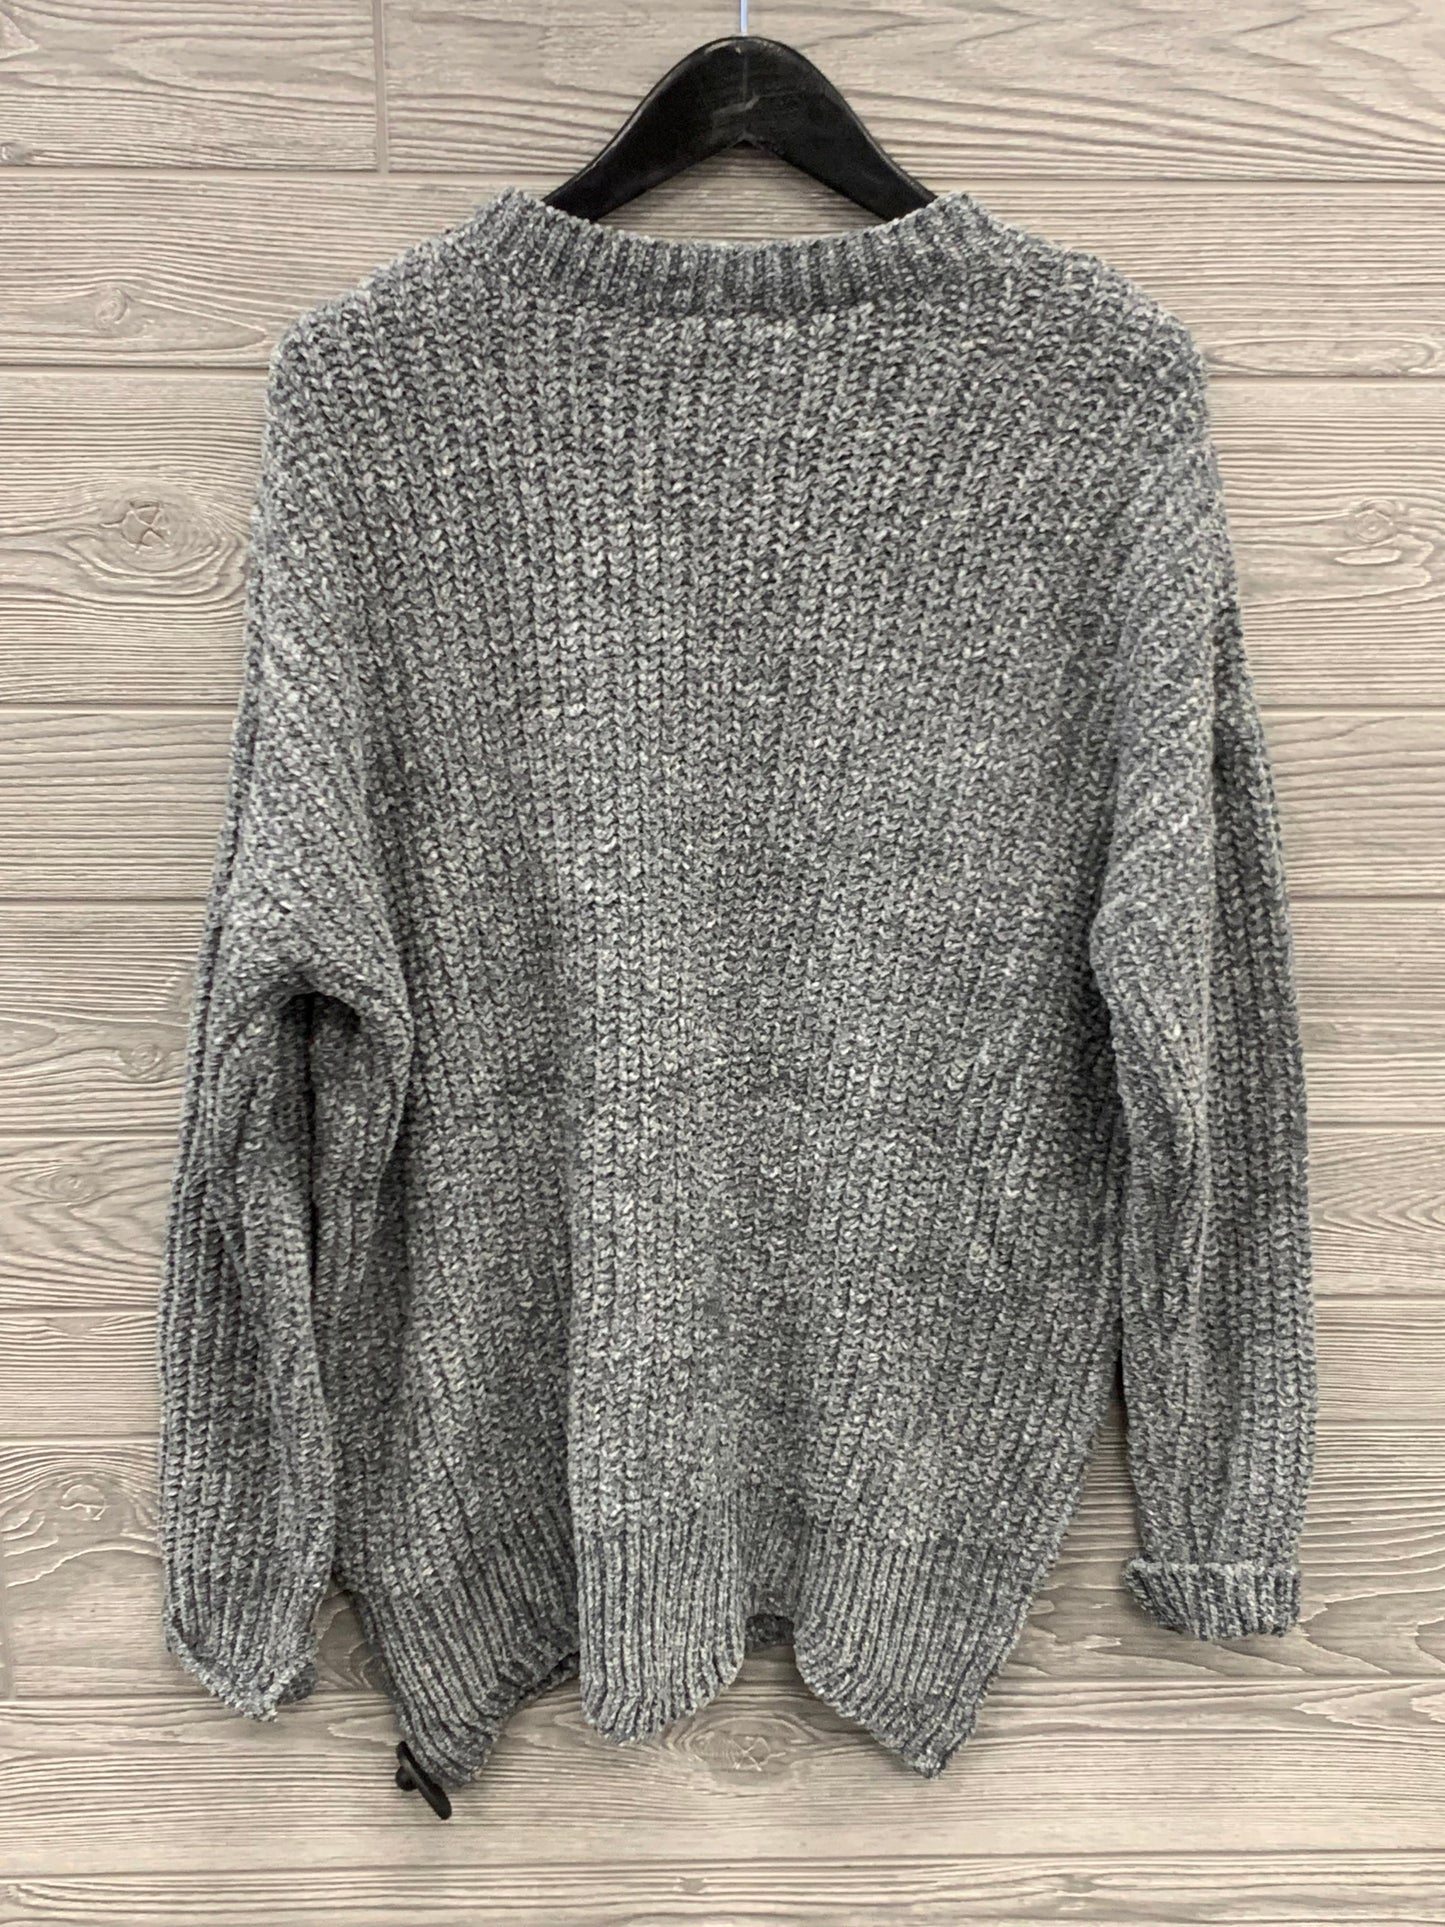 Sweater By Reborn J  Size: 2x